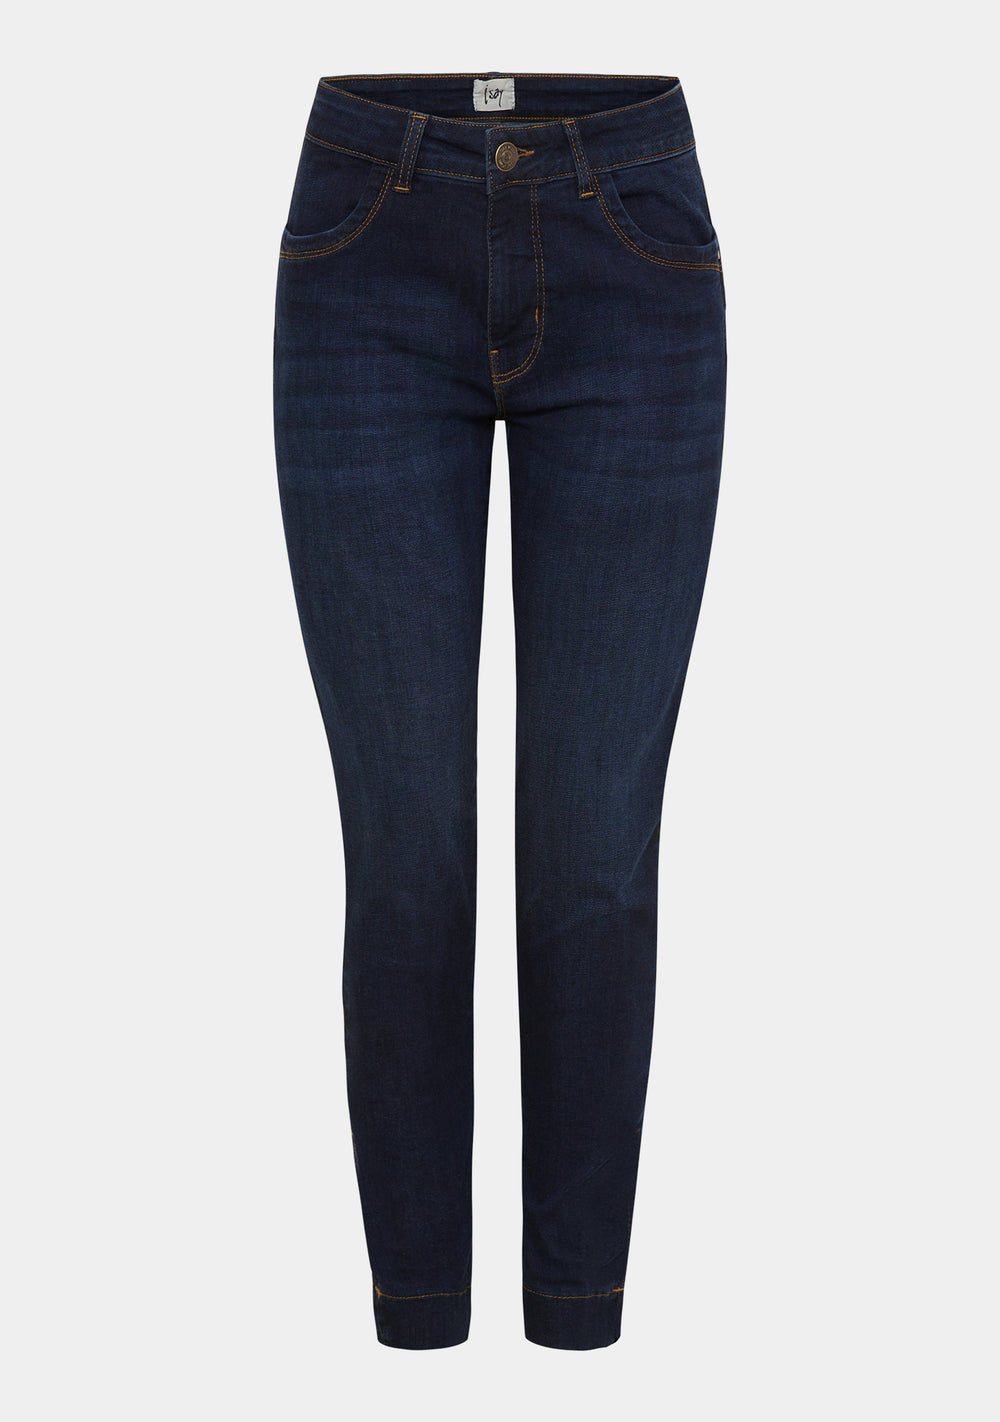 I SAY Verona Basic Jeans Pants 693 Denim Blue Unwashed